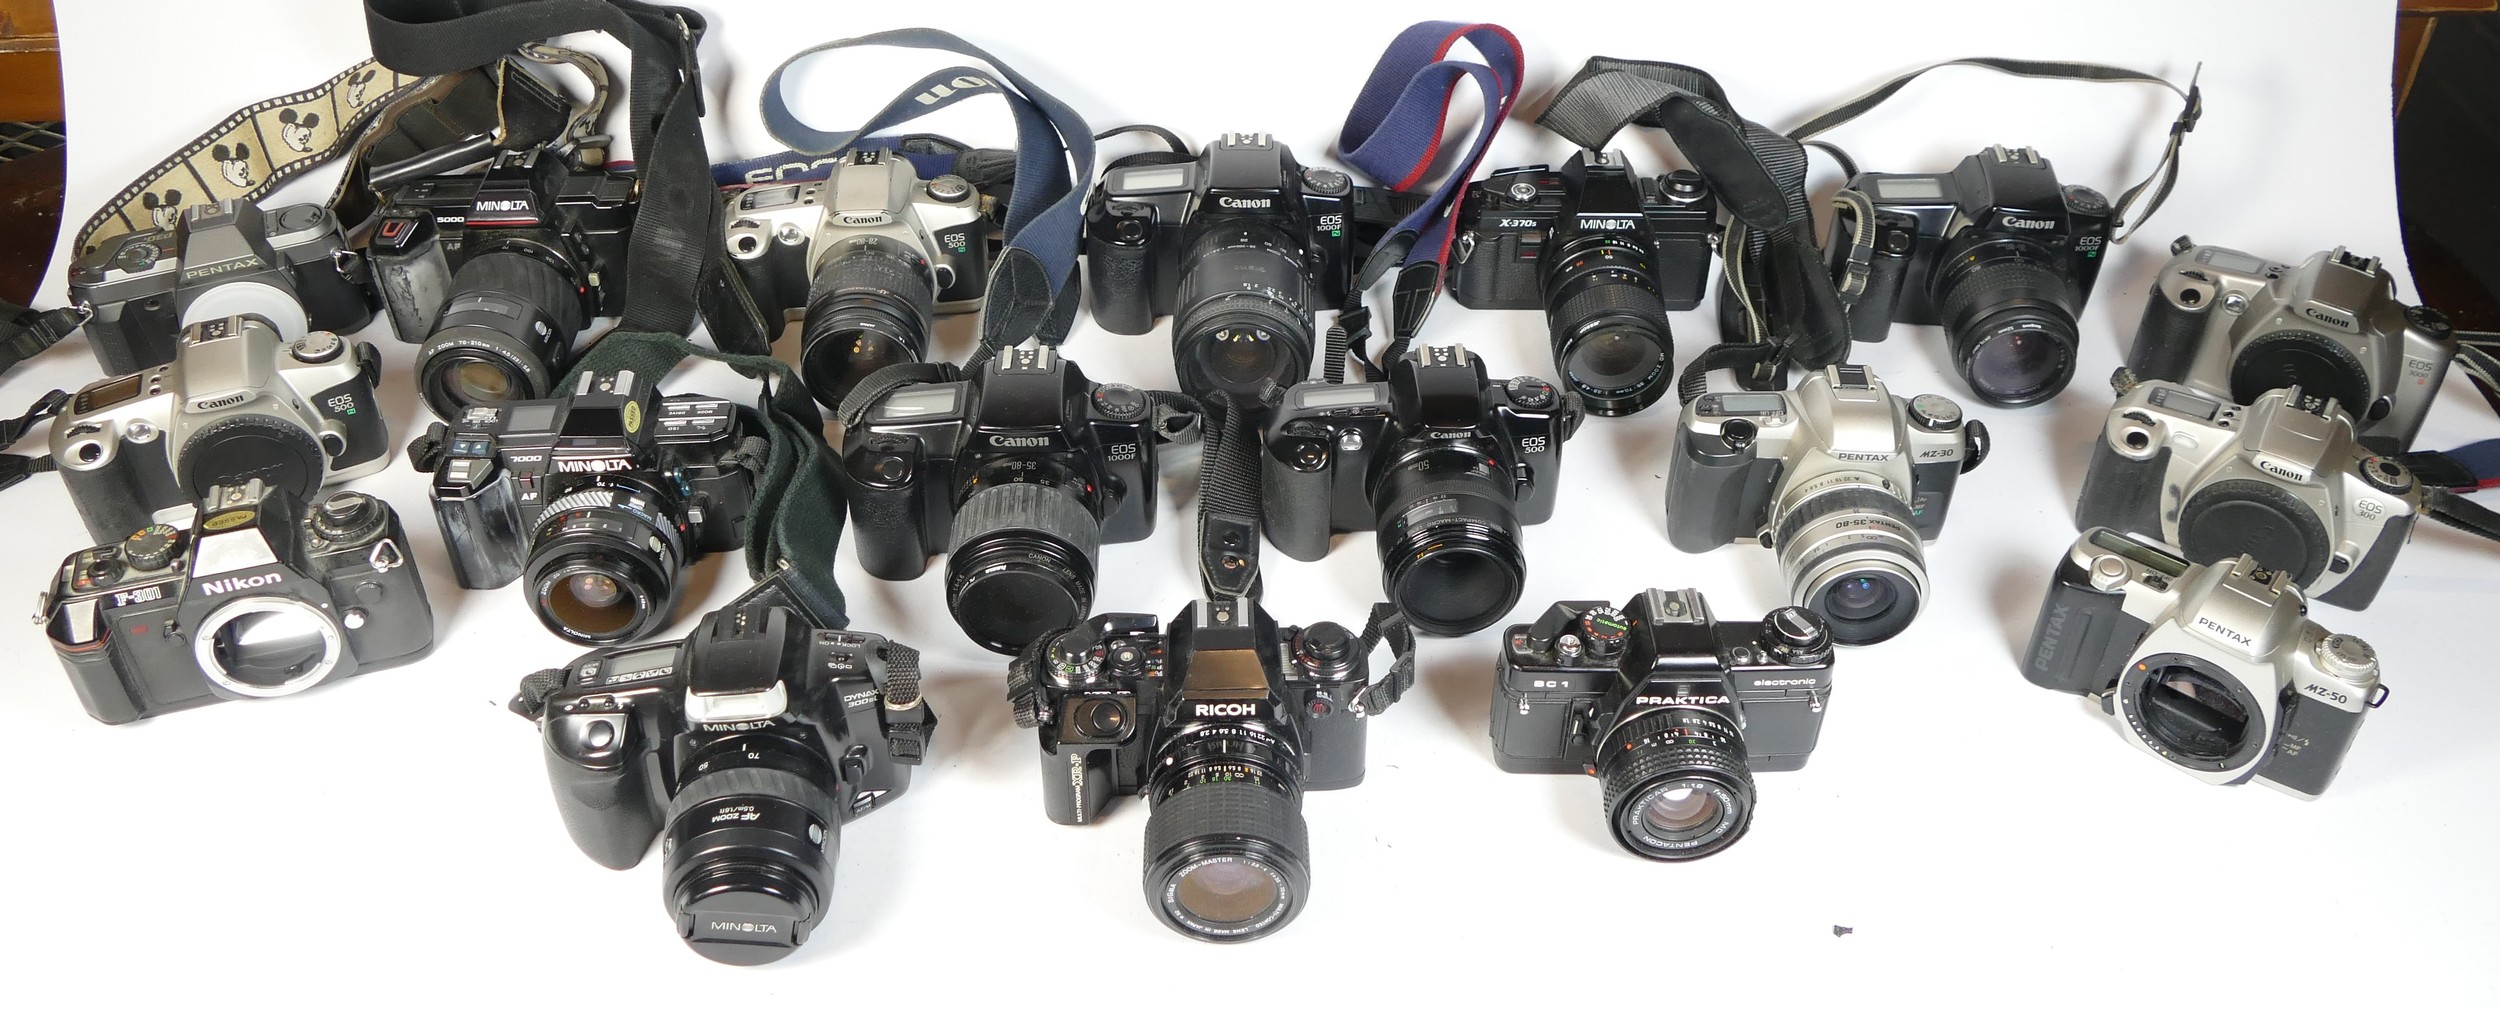 Twenty five SLR vintage film cameras to include a Canon EOS 1000f, a Minolta X-370s, a Pentax MZ-